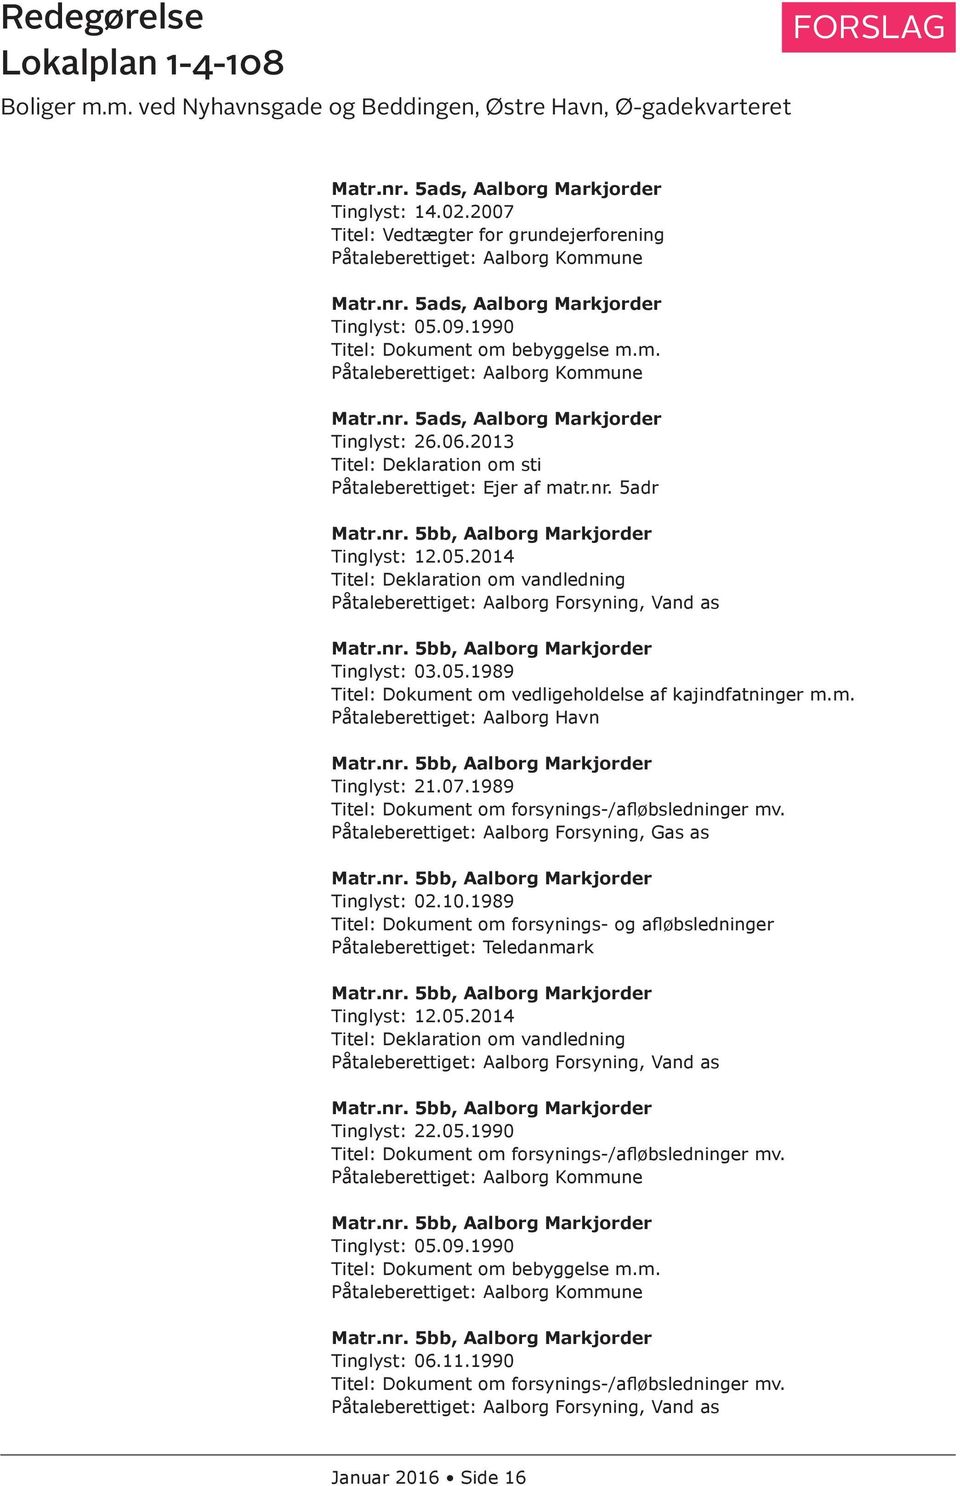 nr. 5bb, Aalborg Markjorder Tinglyst: 12.05.2014 Titel: Deklaration om vandledning Påtaleberettiget: Aalborg Forsyning, Vand as Matr.nr. 5bb, Aalborg Markjorder Tinglyst: 03.05.1989 Titel: Dokument om vedligeholdelse af kajindfatninger m.